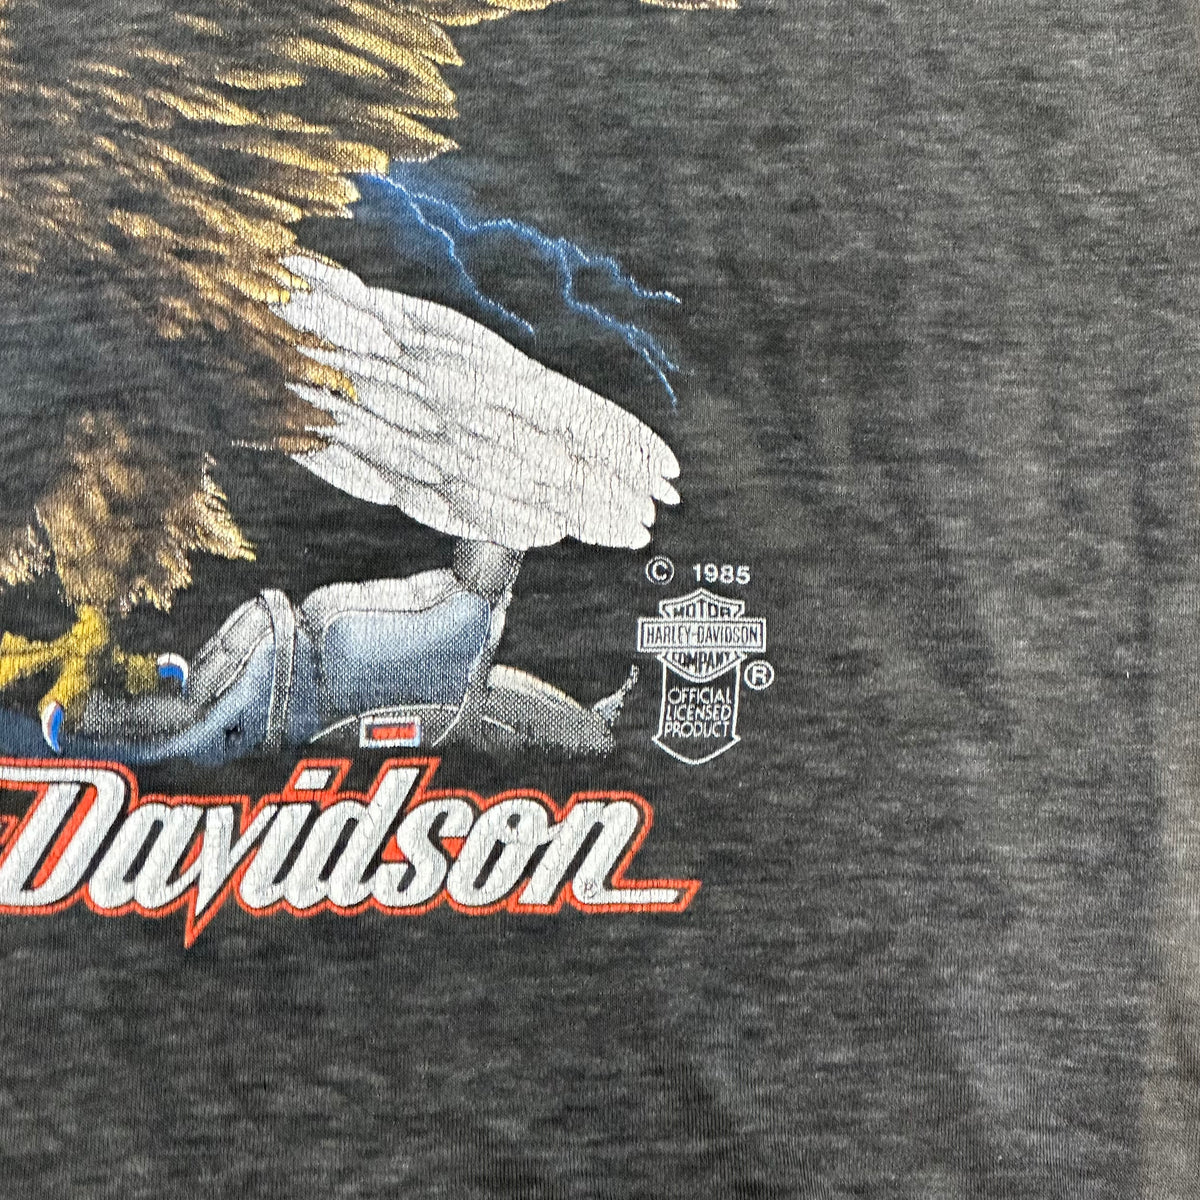 1985 Vintage Harley Davidson House Of Harley Anchorage Alaska shirt